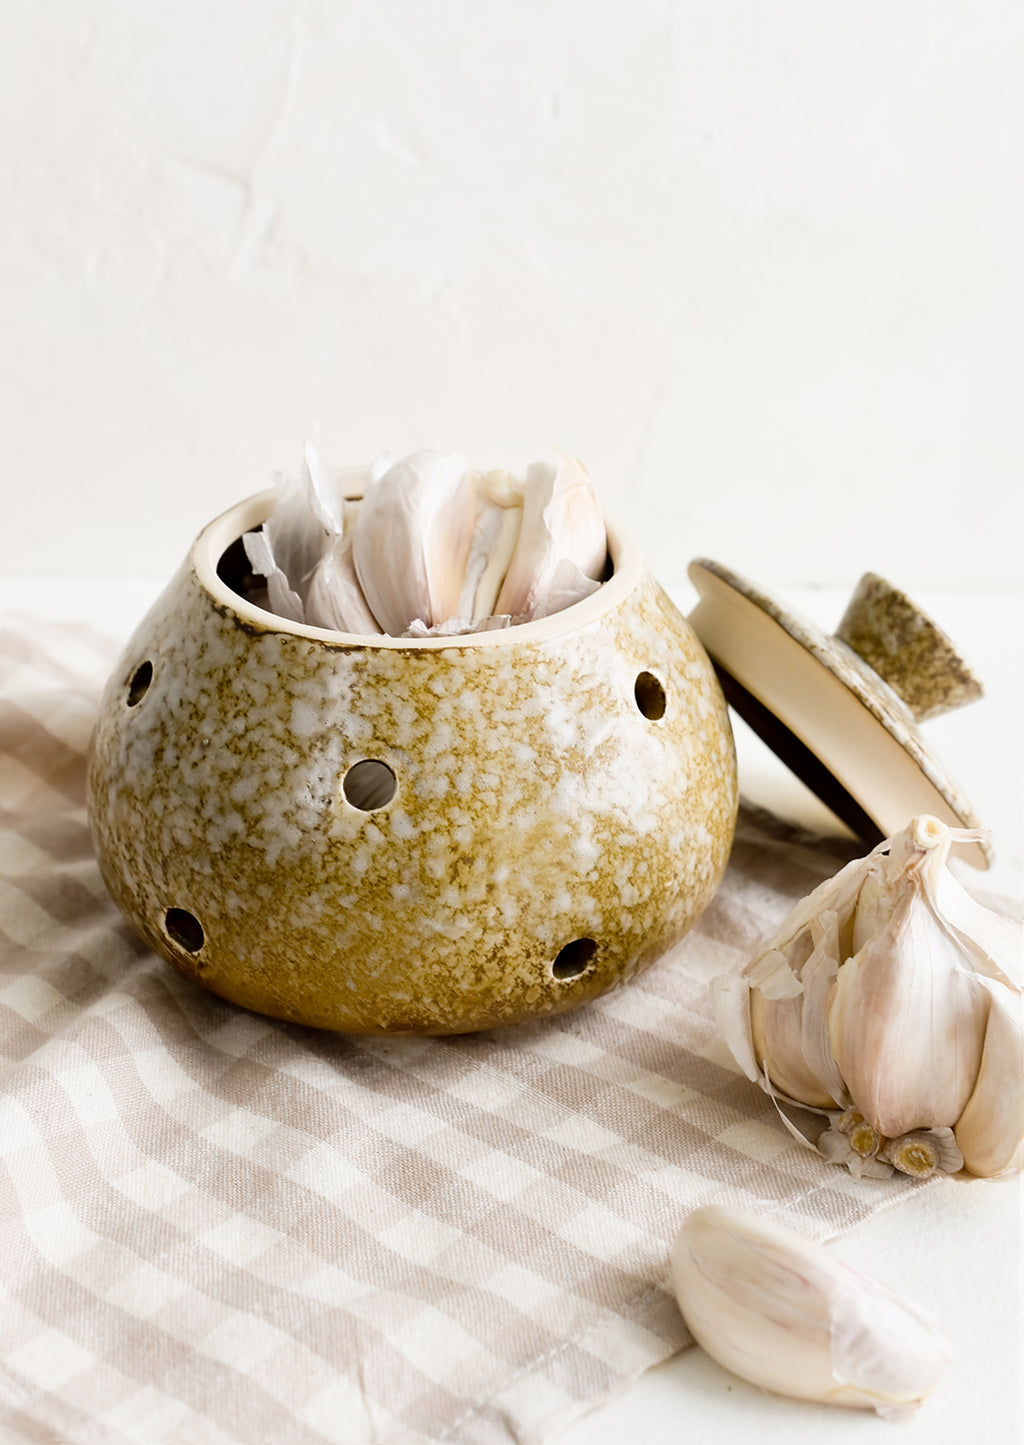 1: A brown ceramic garlic keeper with garlic heads.